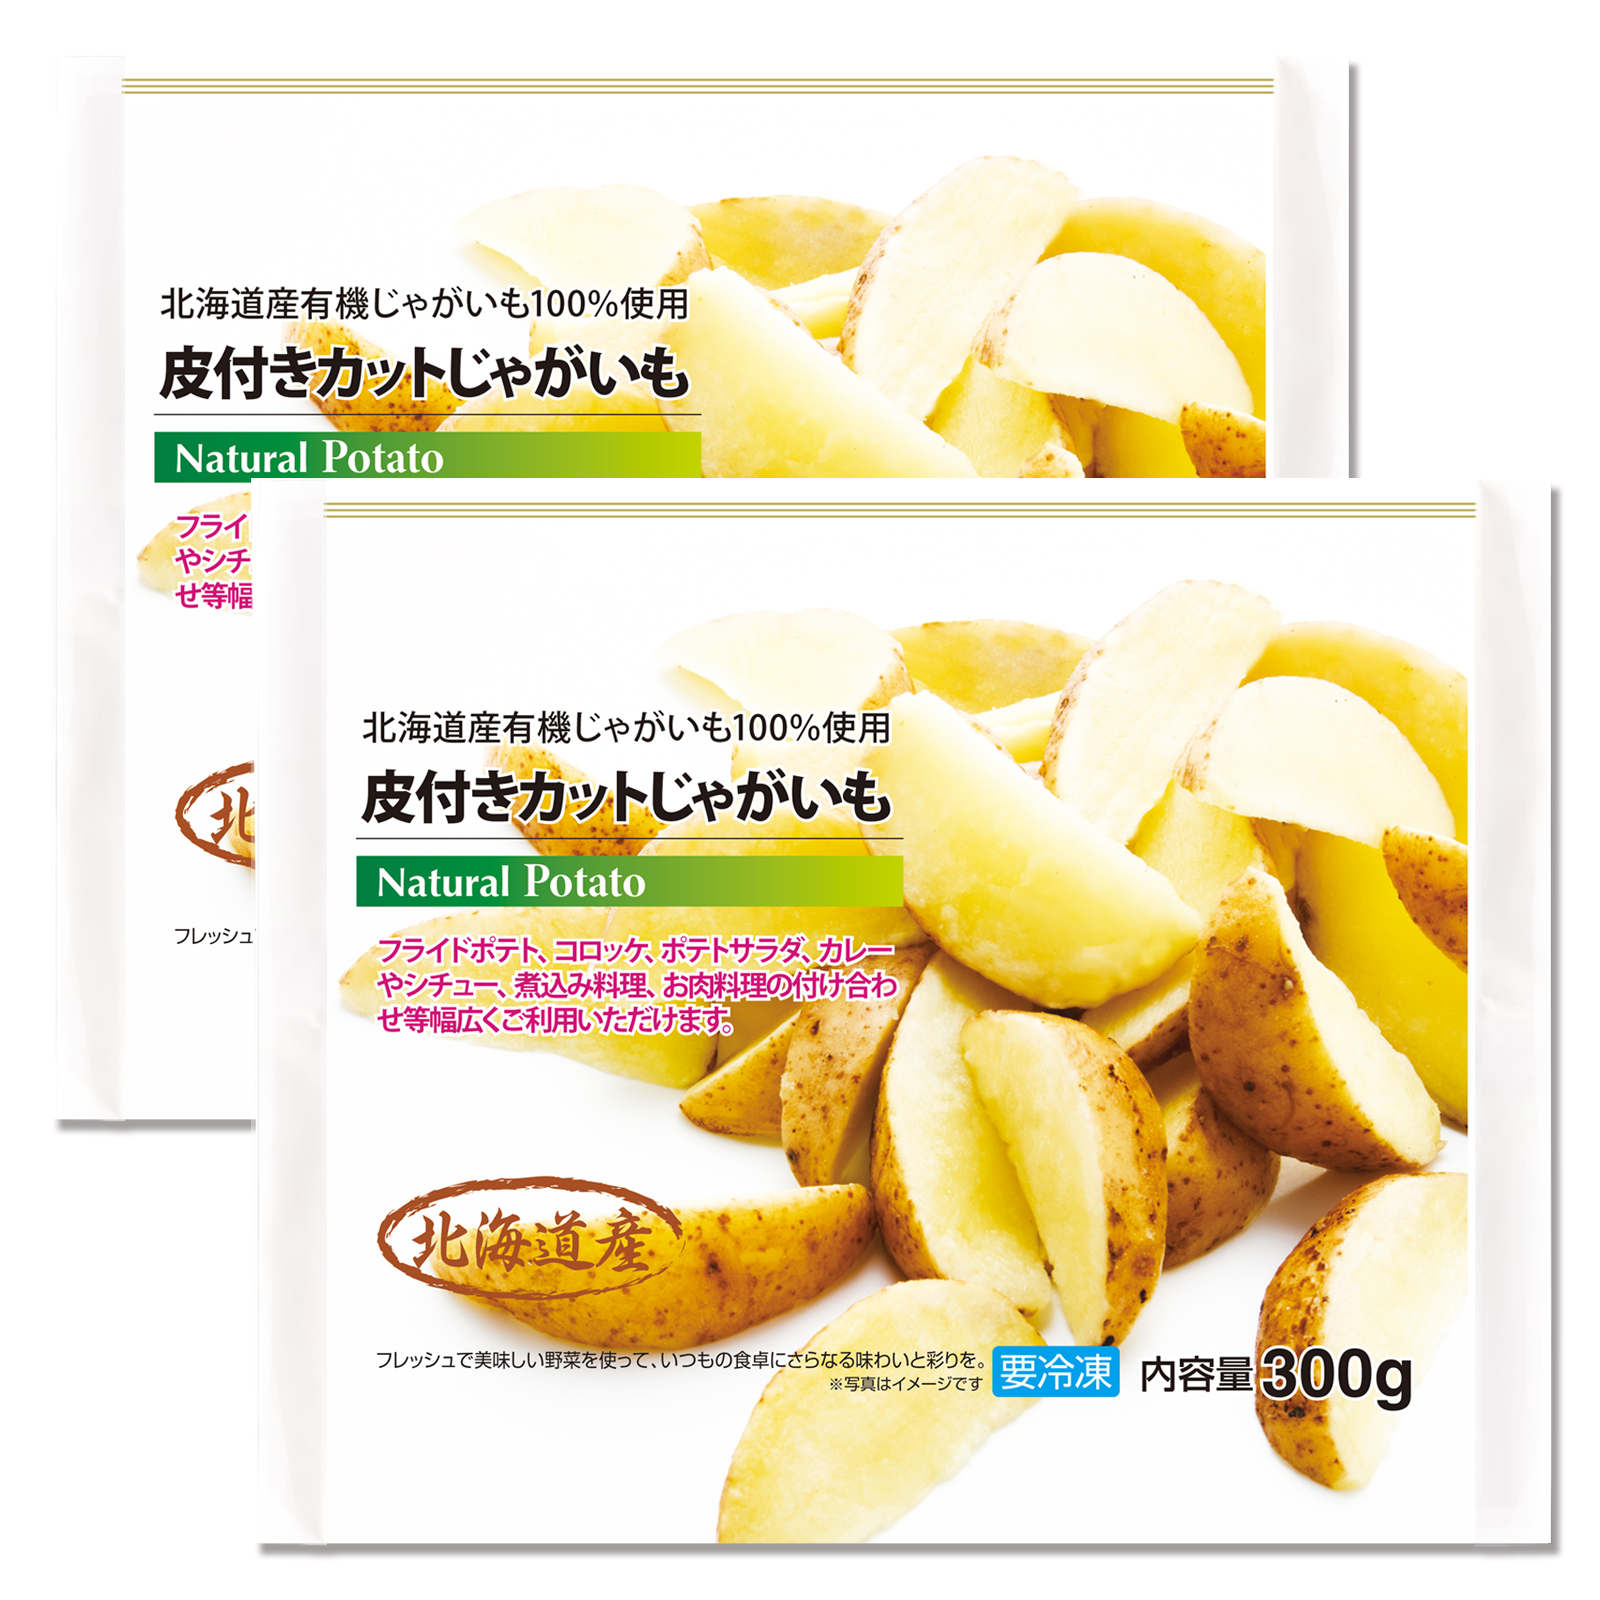 Organic Frozen Skin-On Potato Wedges from Japan (600g) - Horizon Farms